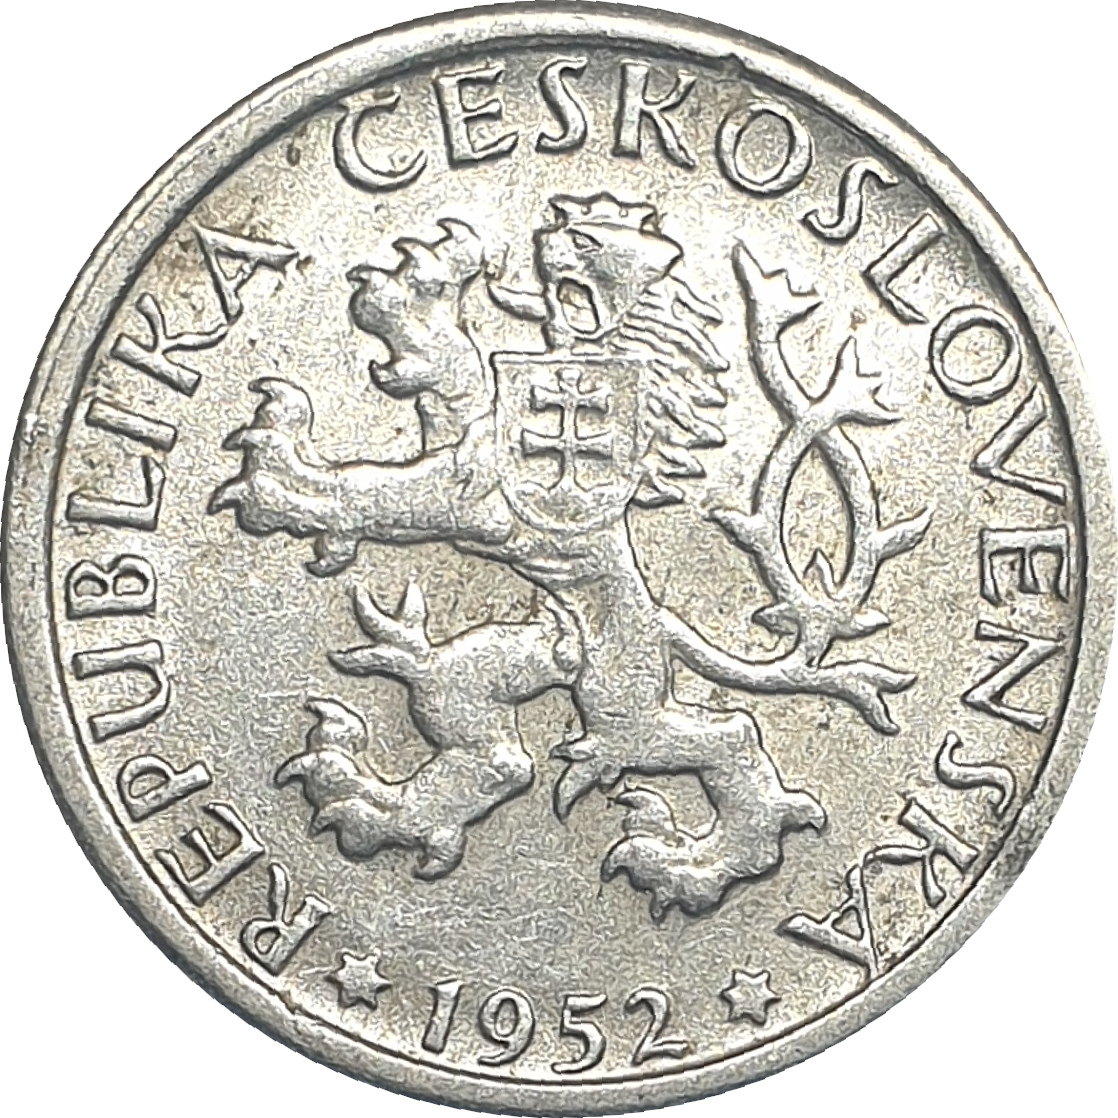 1 koruna - Lion héraldique